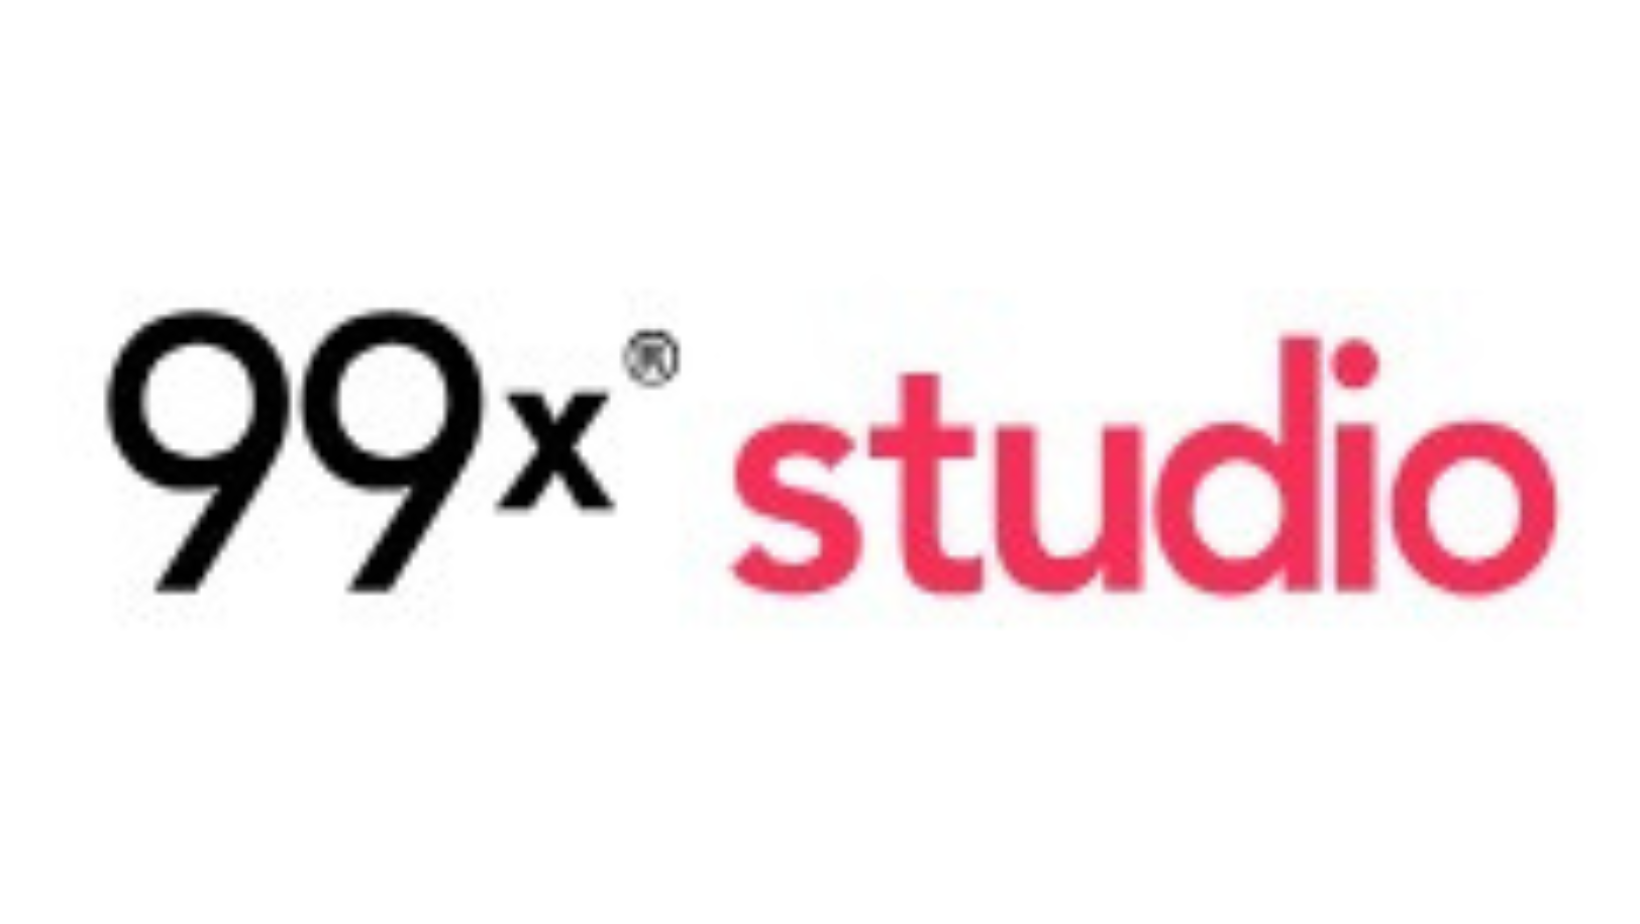 99x logo